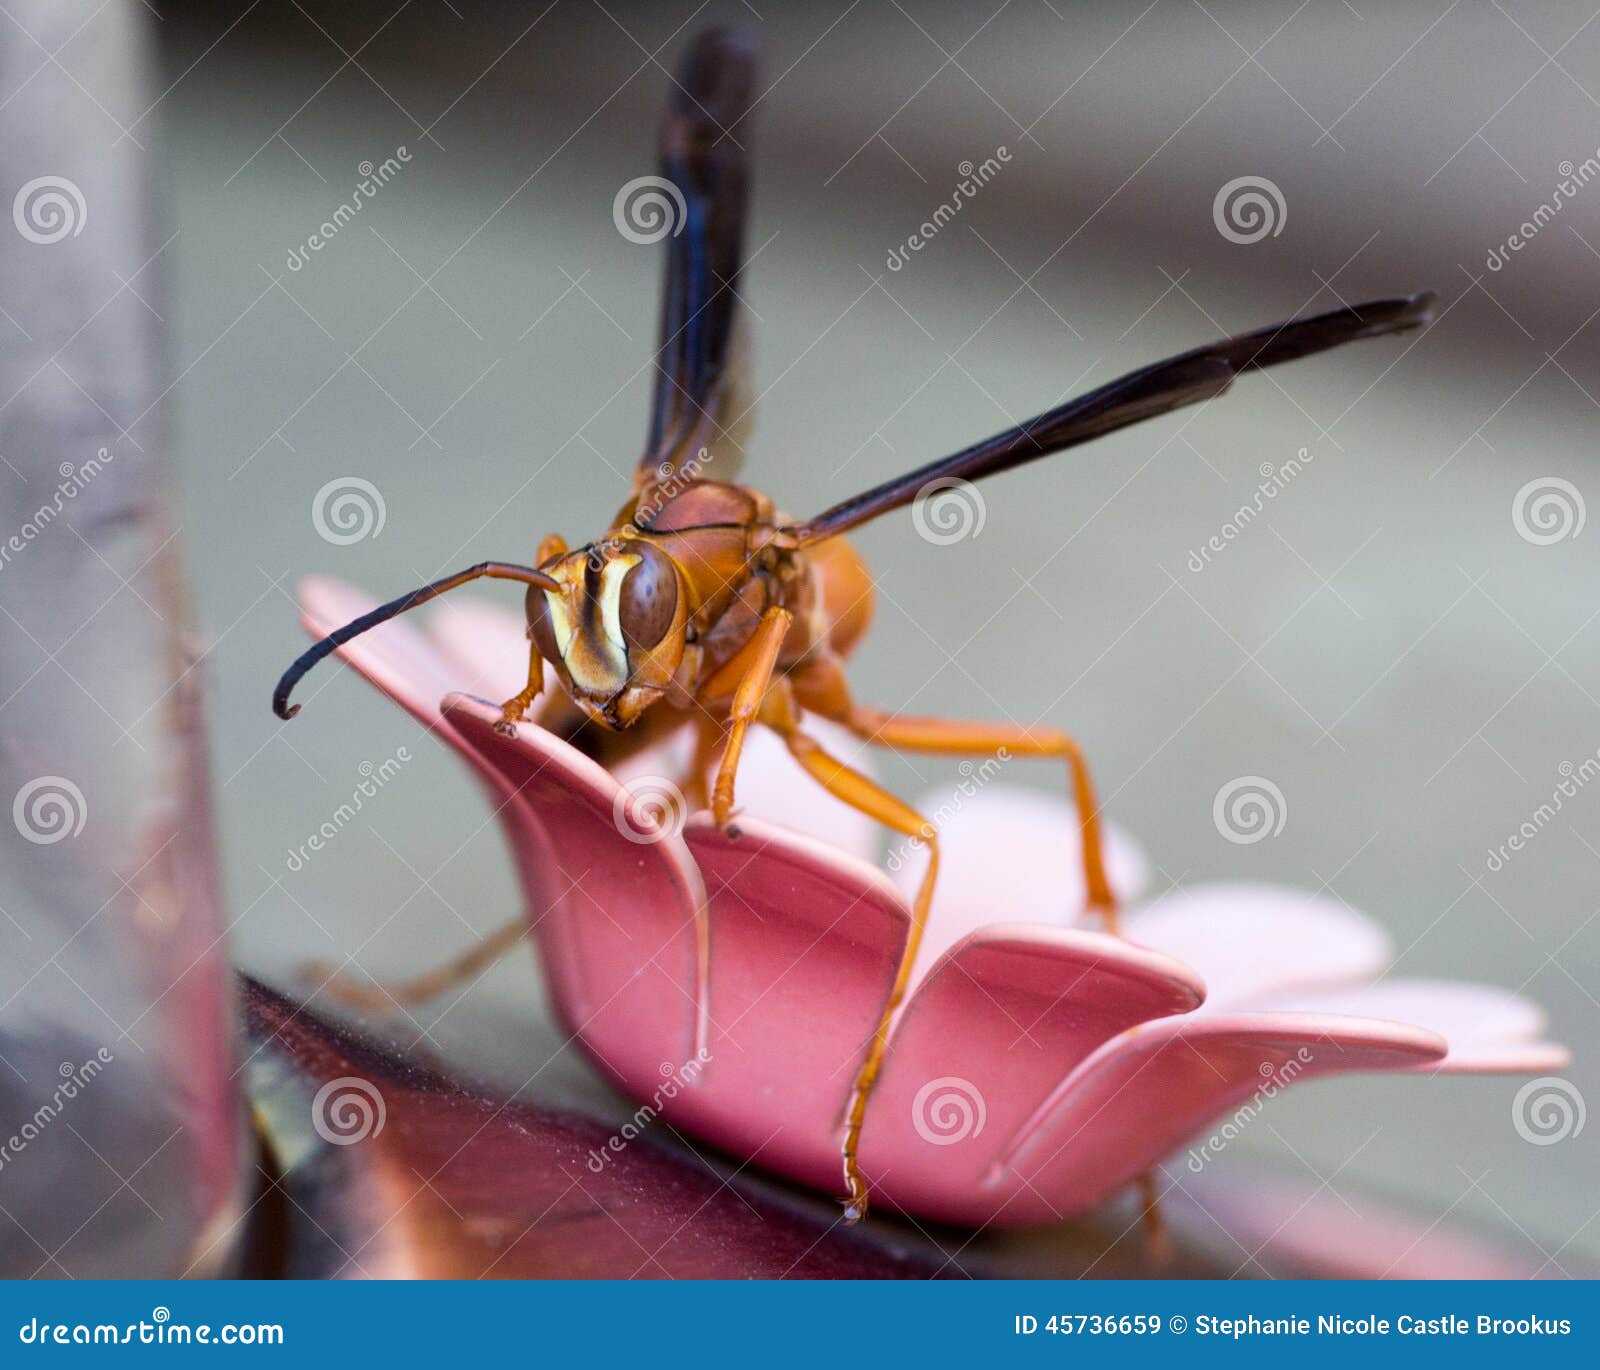 polistes perplexus, red paper wasp